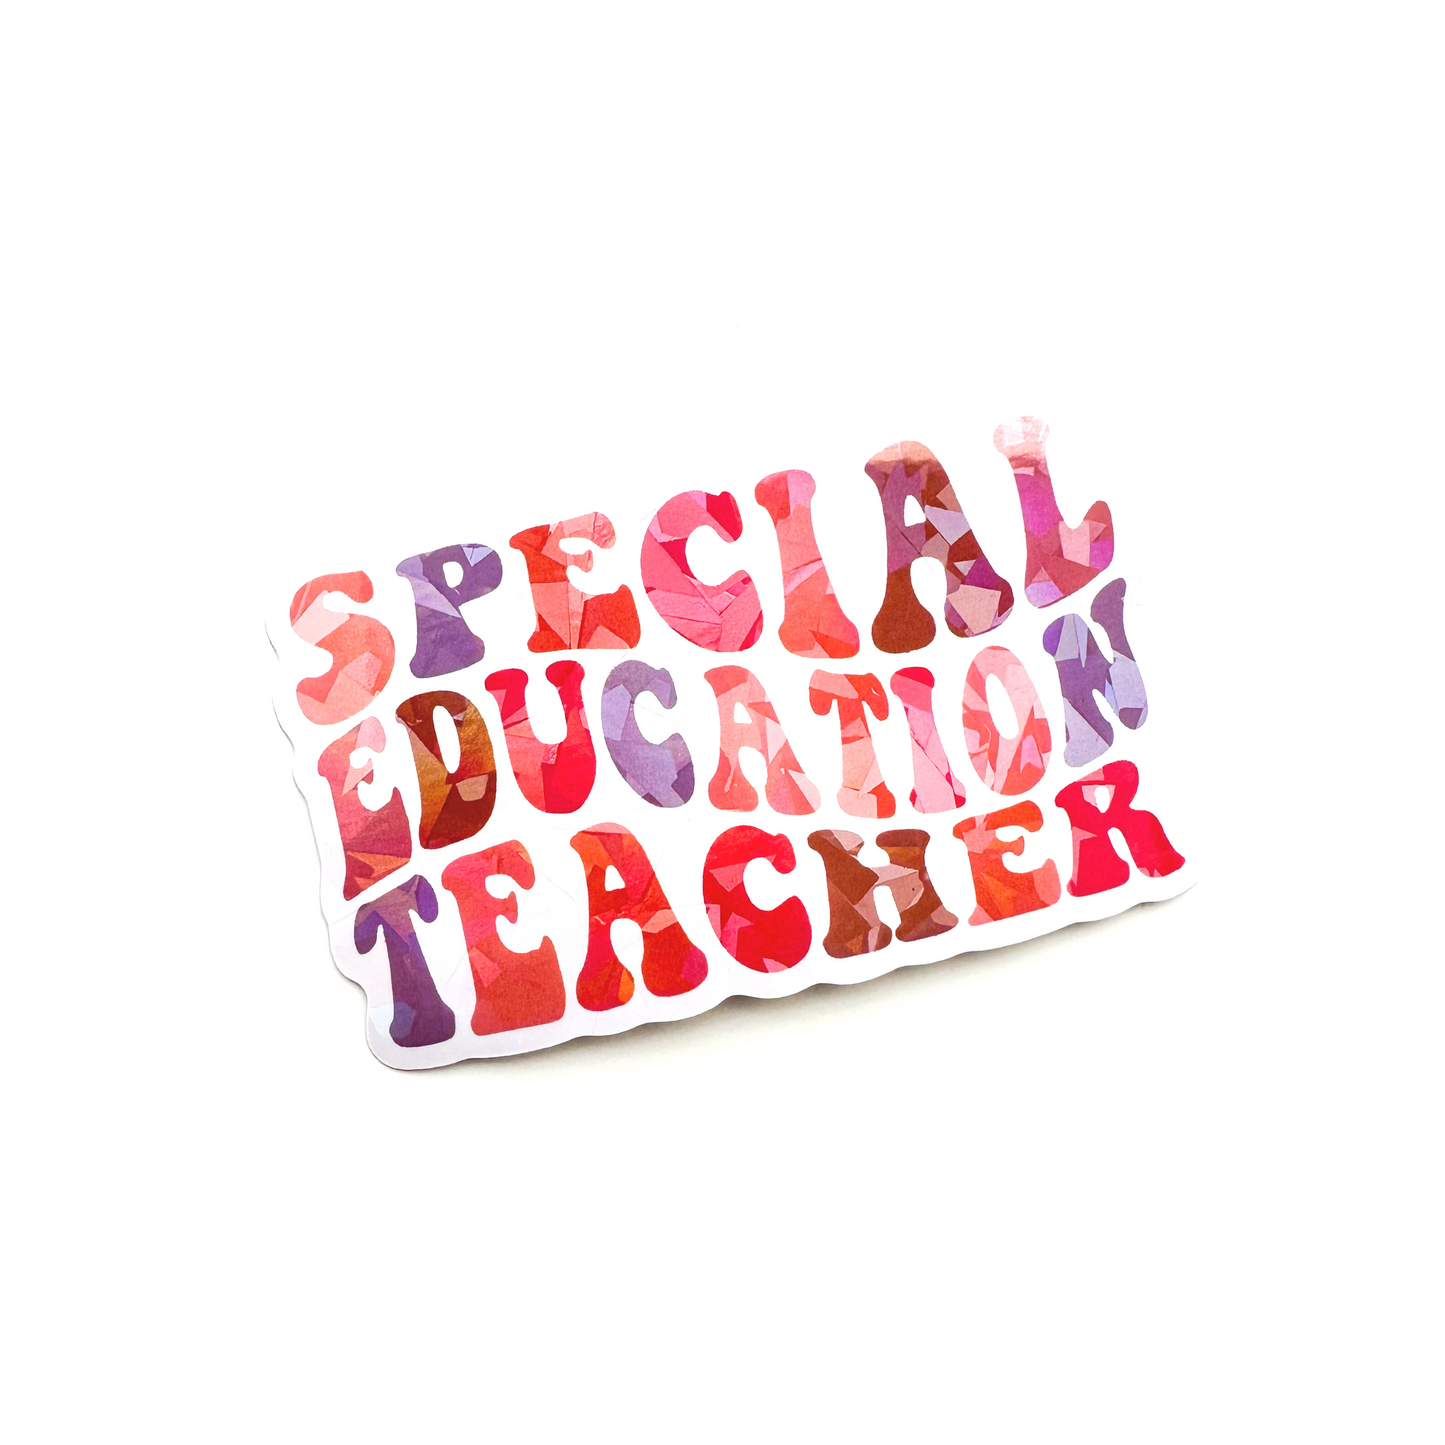 Special Education Teacher Sticker